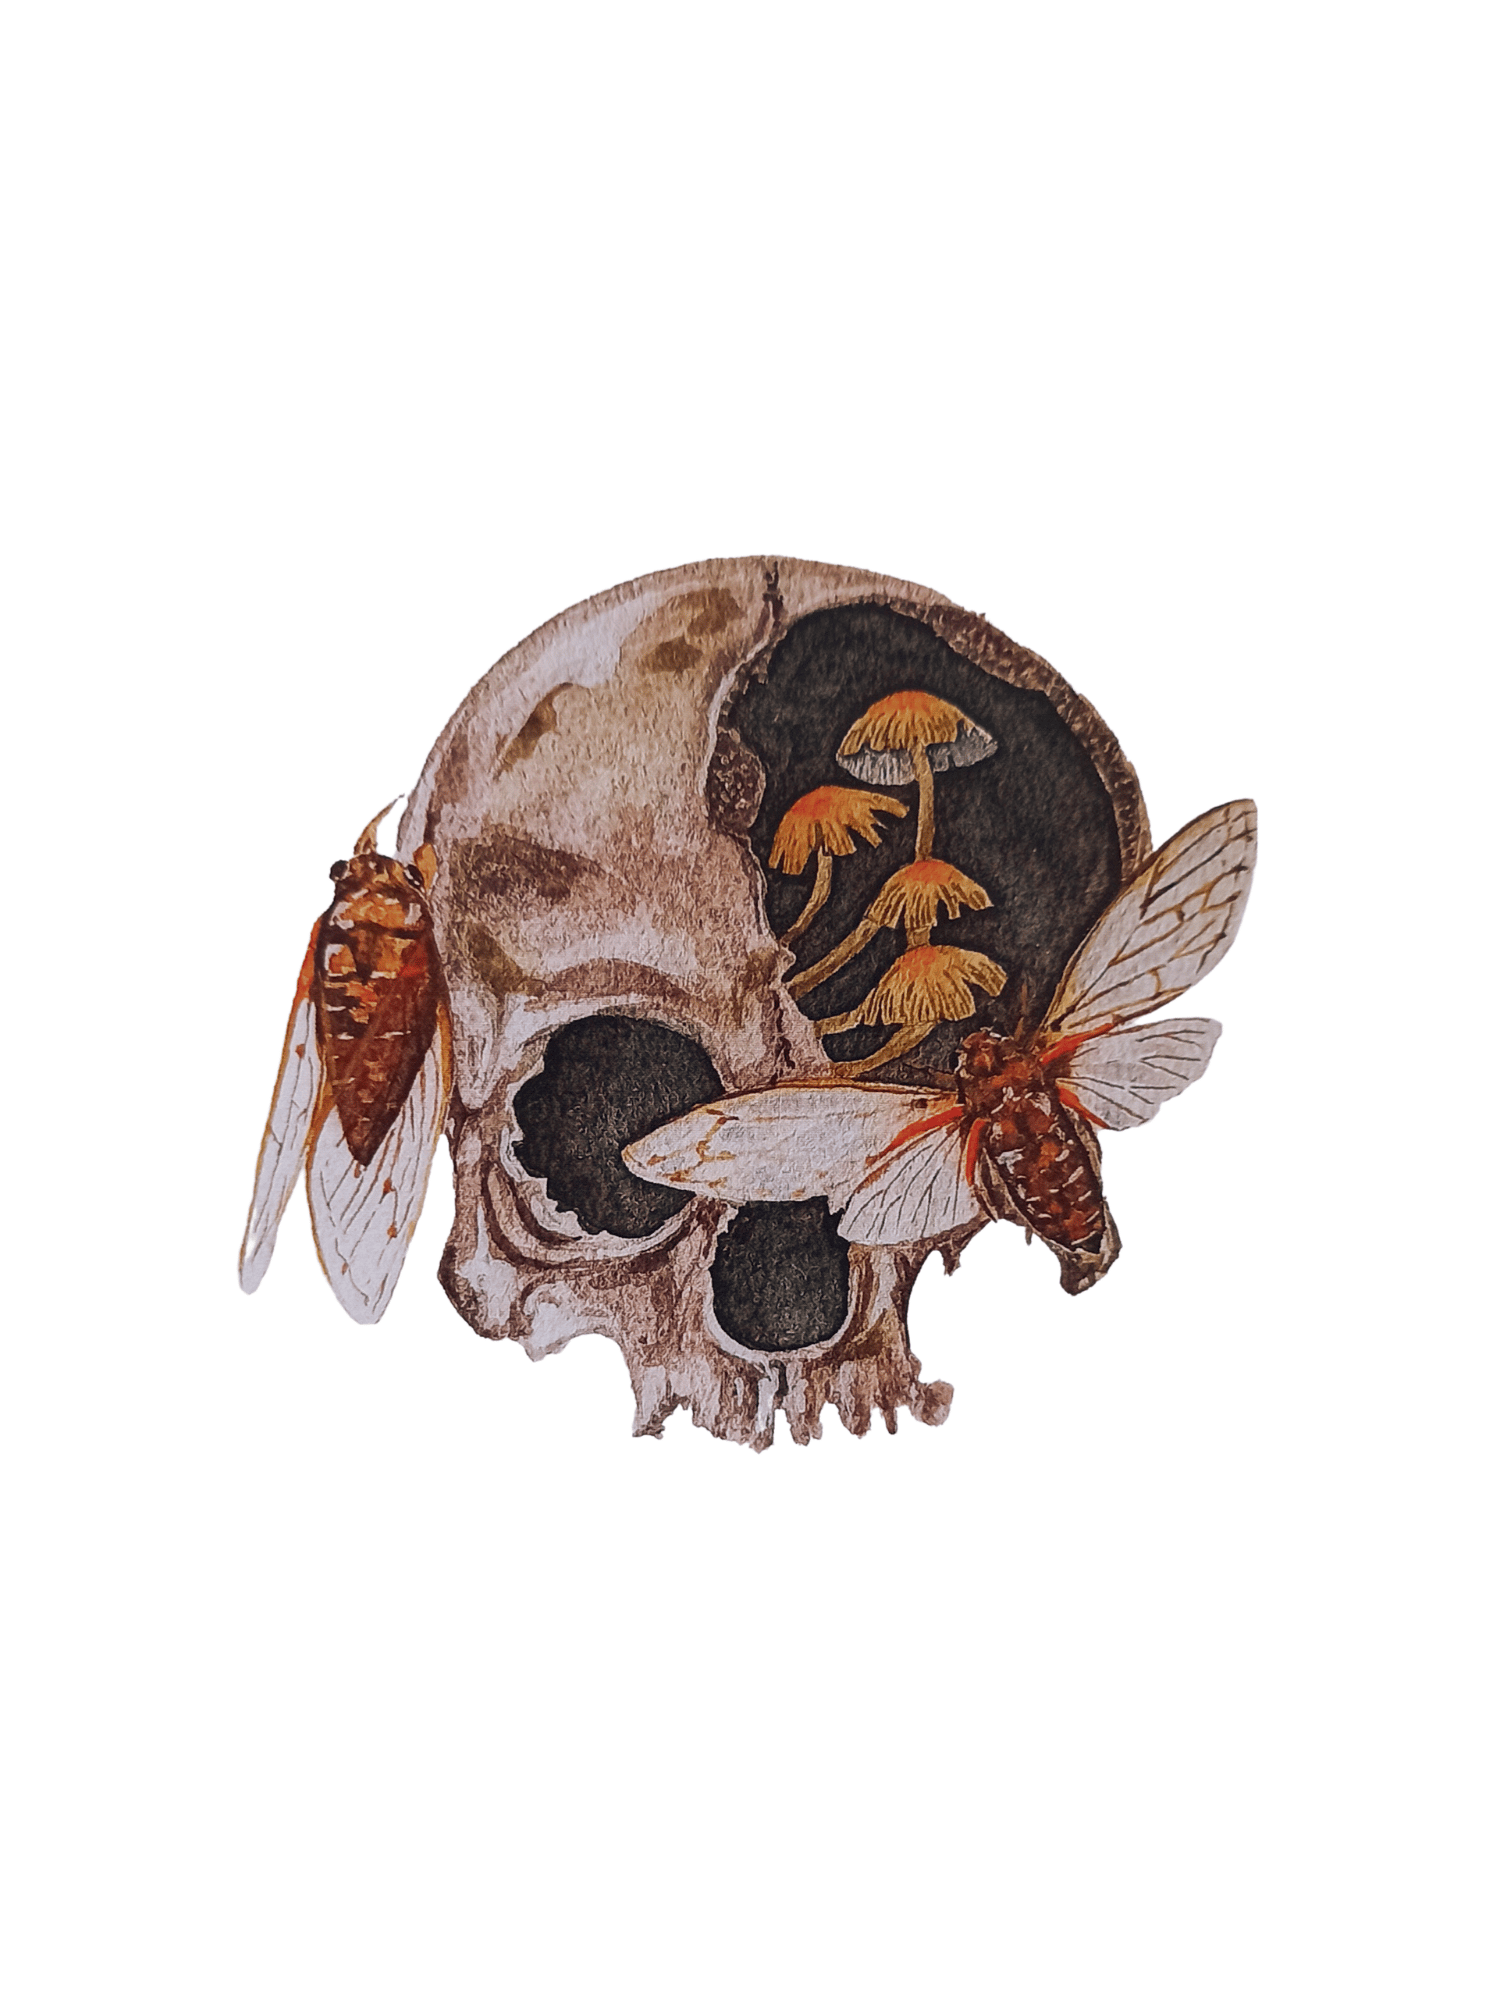 Image of Skull-Cicadas Watercolor Illustration PRINT 